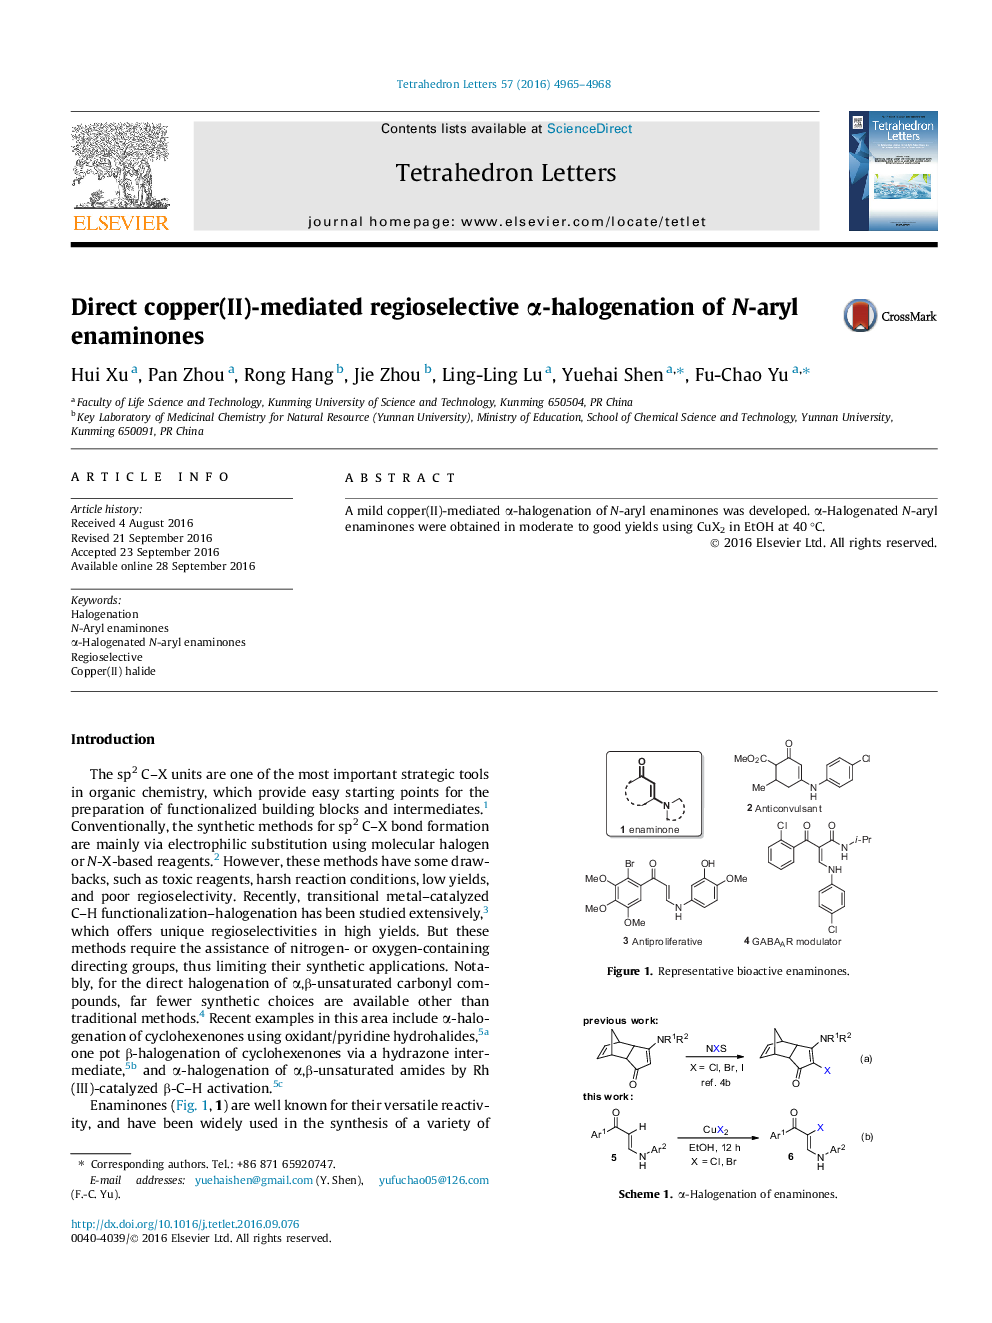 Direct copper(II)-mediated regioselective Î±-halogenation of N-aryl enaminones